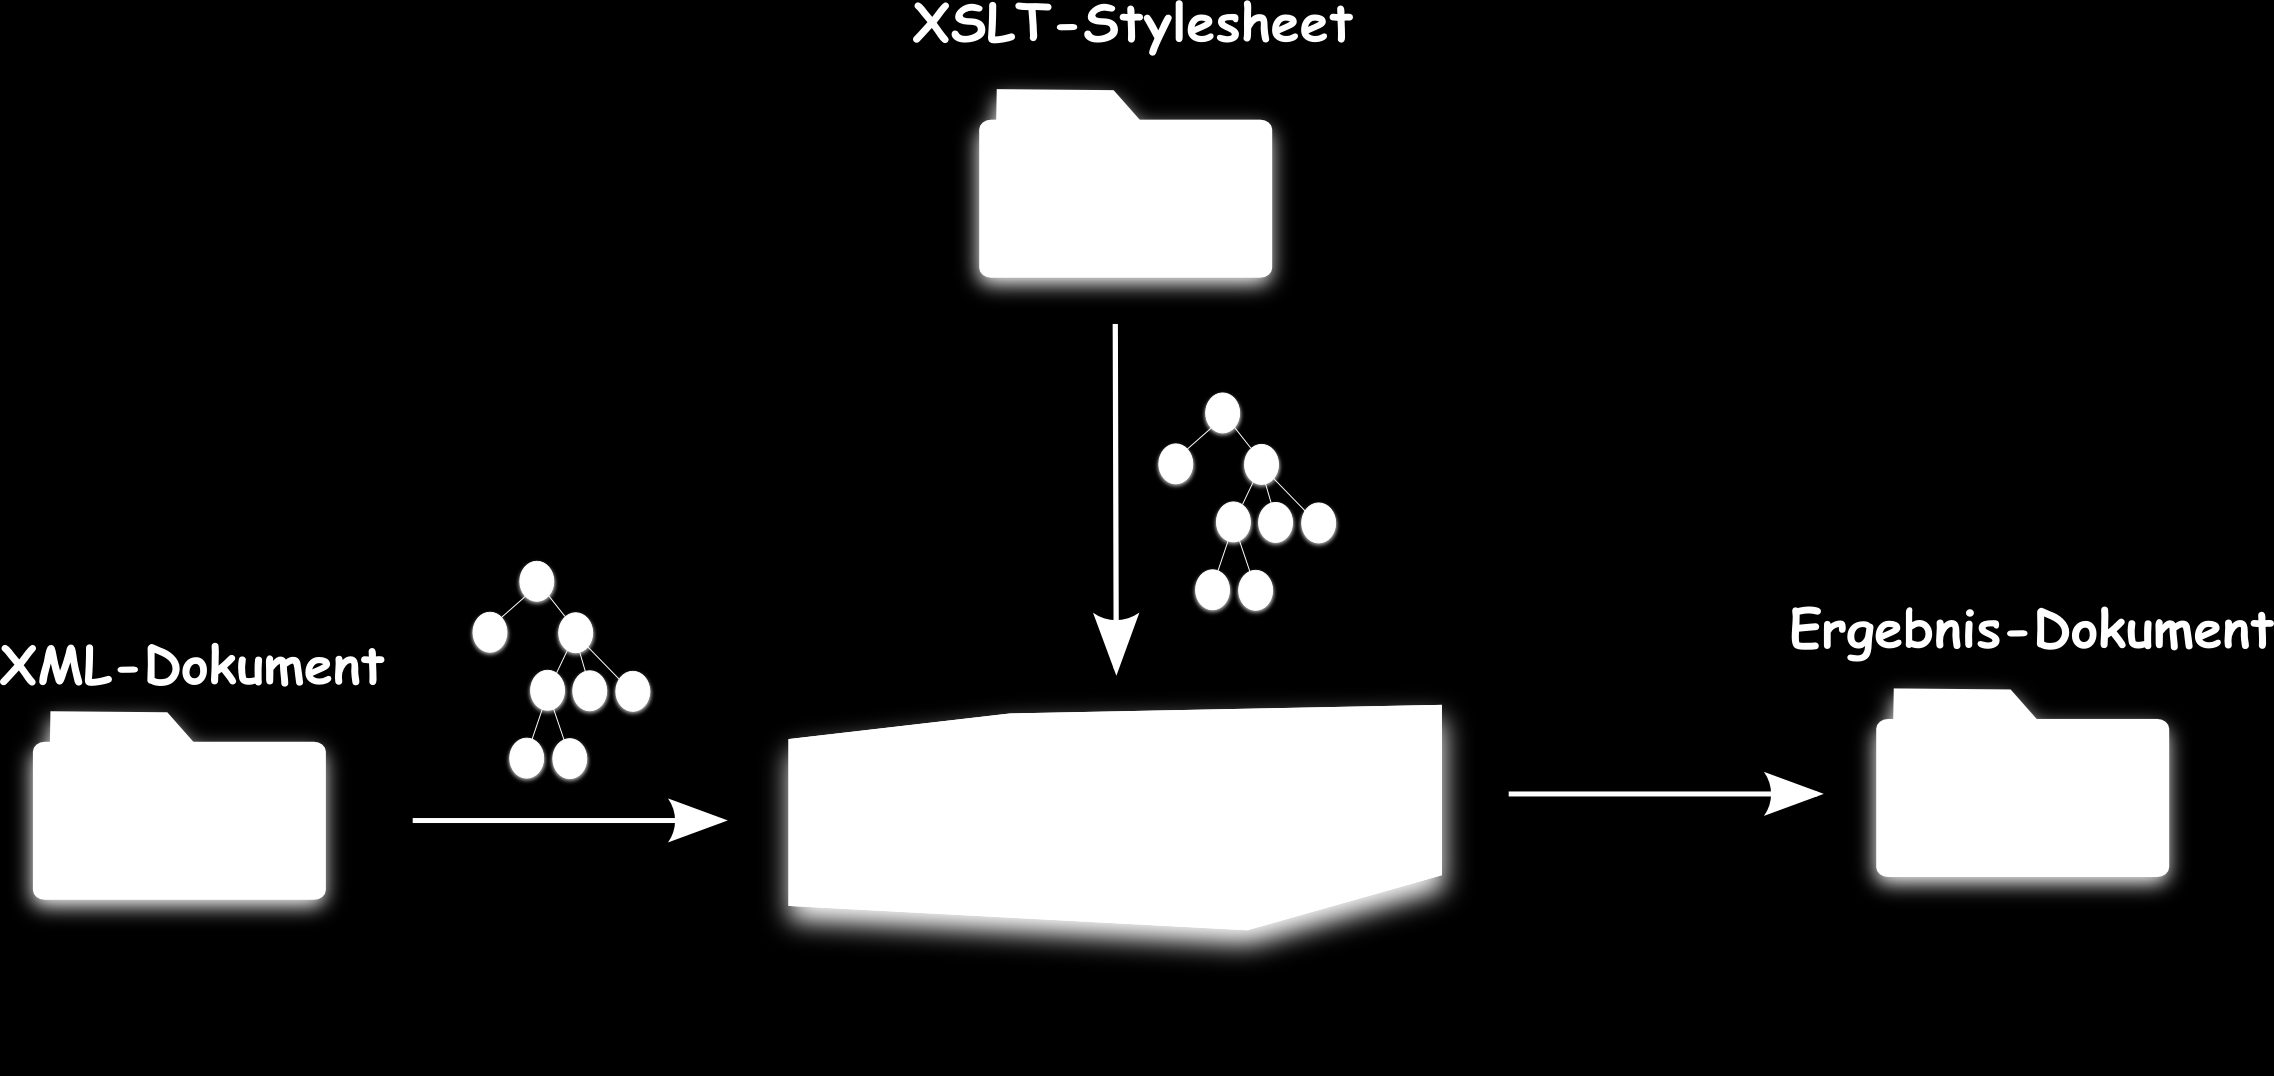 XML Extensible Markup Language XSL XSL XSLT XSLT Transformationen mit XSL-Stylesheets XSLT-Stylesheet: Transformationsregeln für XML-Dokument Zielsprachen: XML, HTML, XHTML, Text, PDF und andere